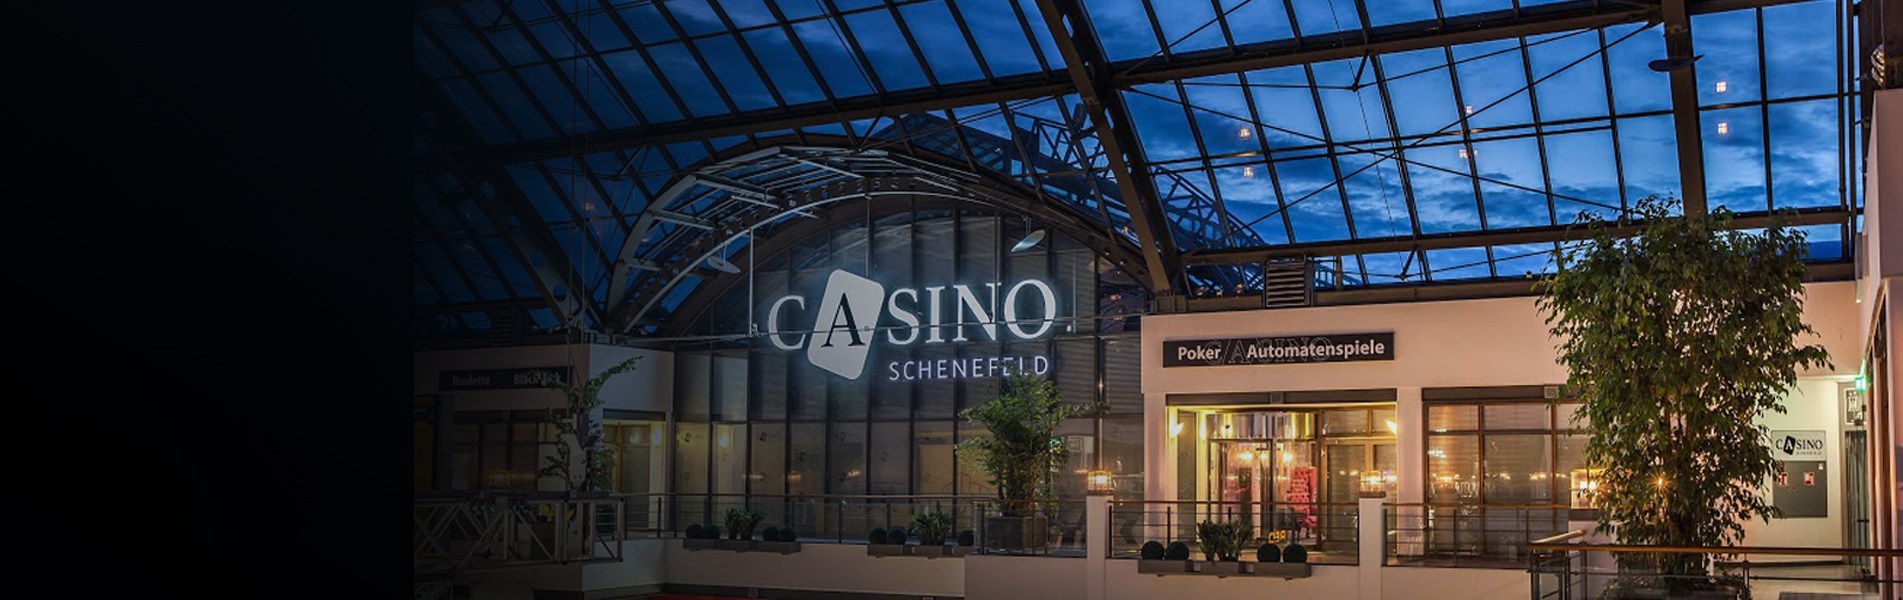 Casino Schenefeld 1